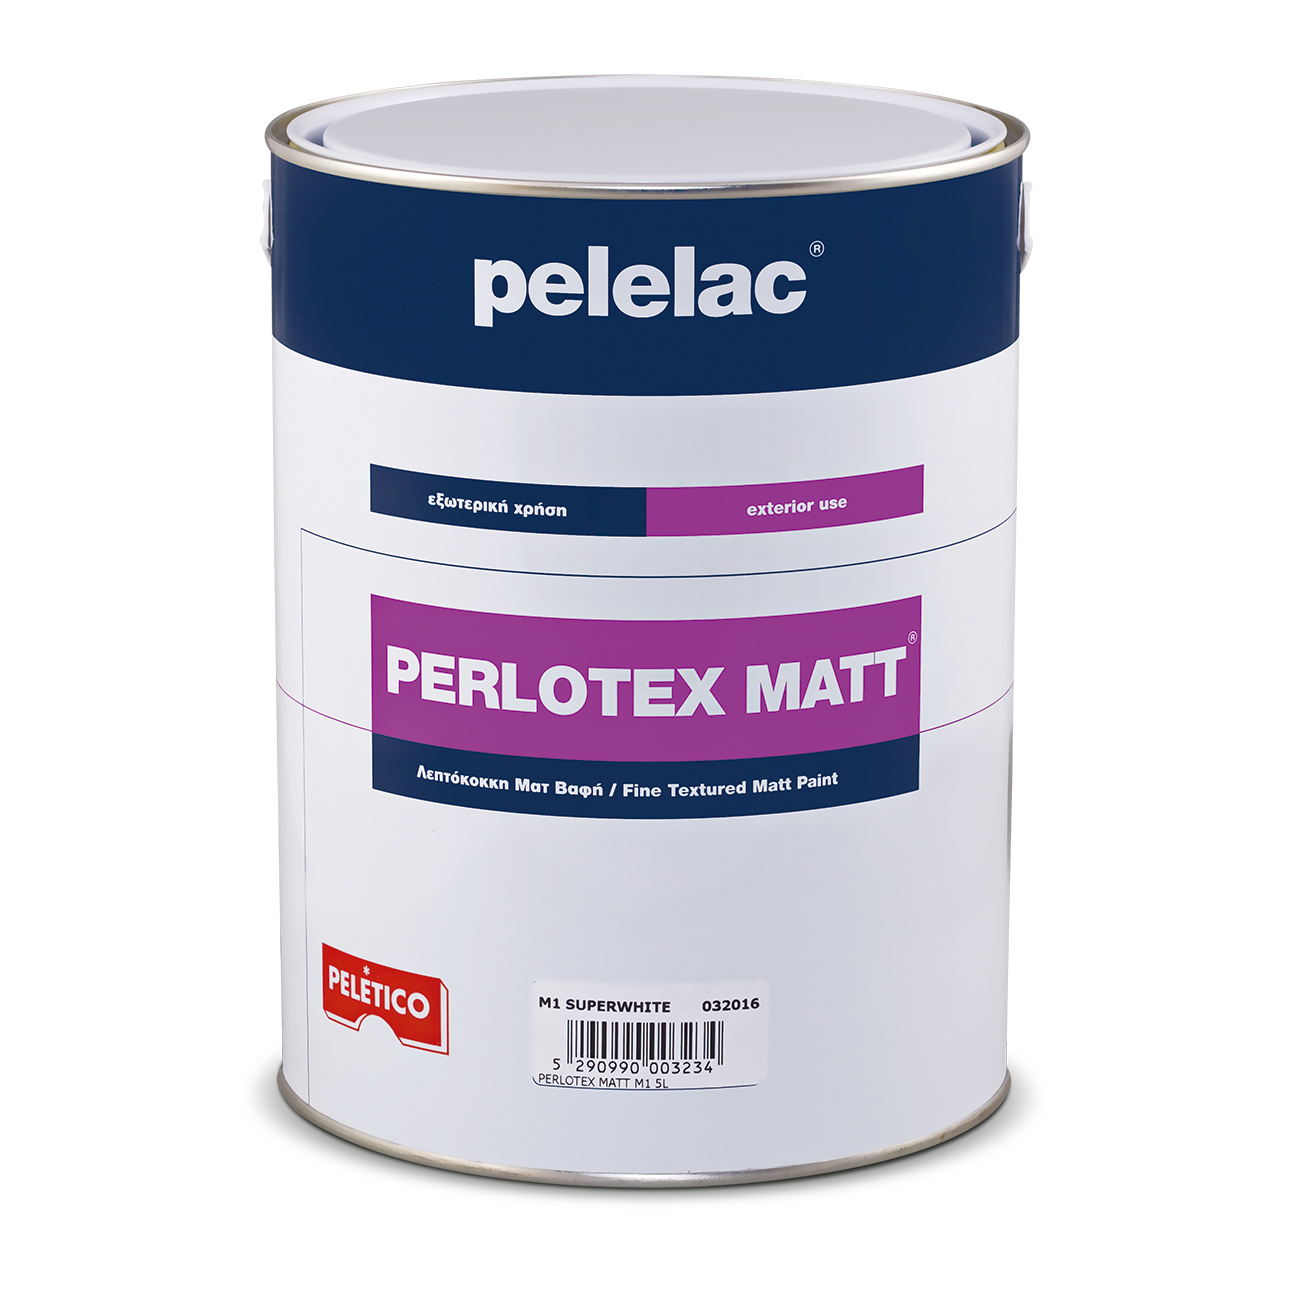 PELELAC PERLOTEX MATT® EXTRA WHITE M13 16L